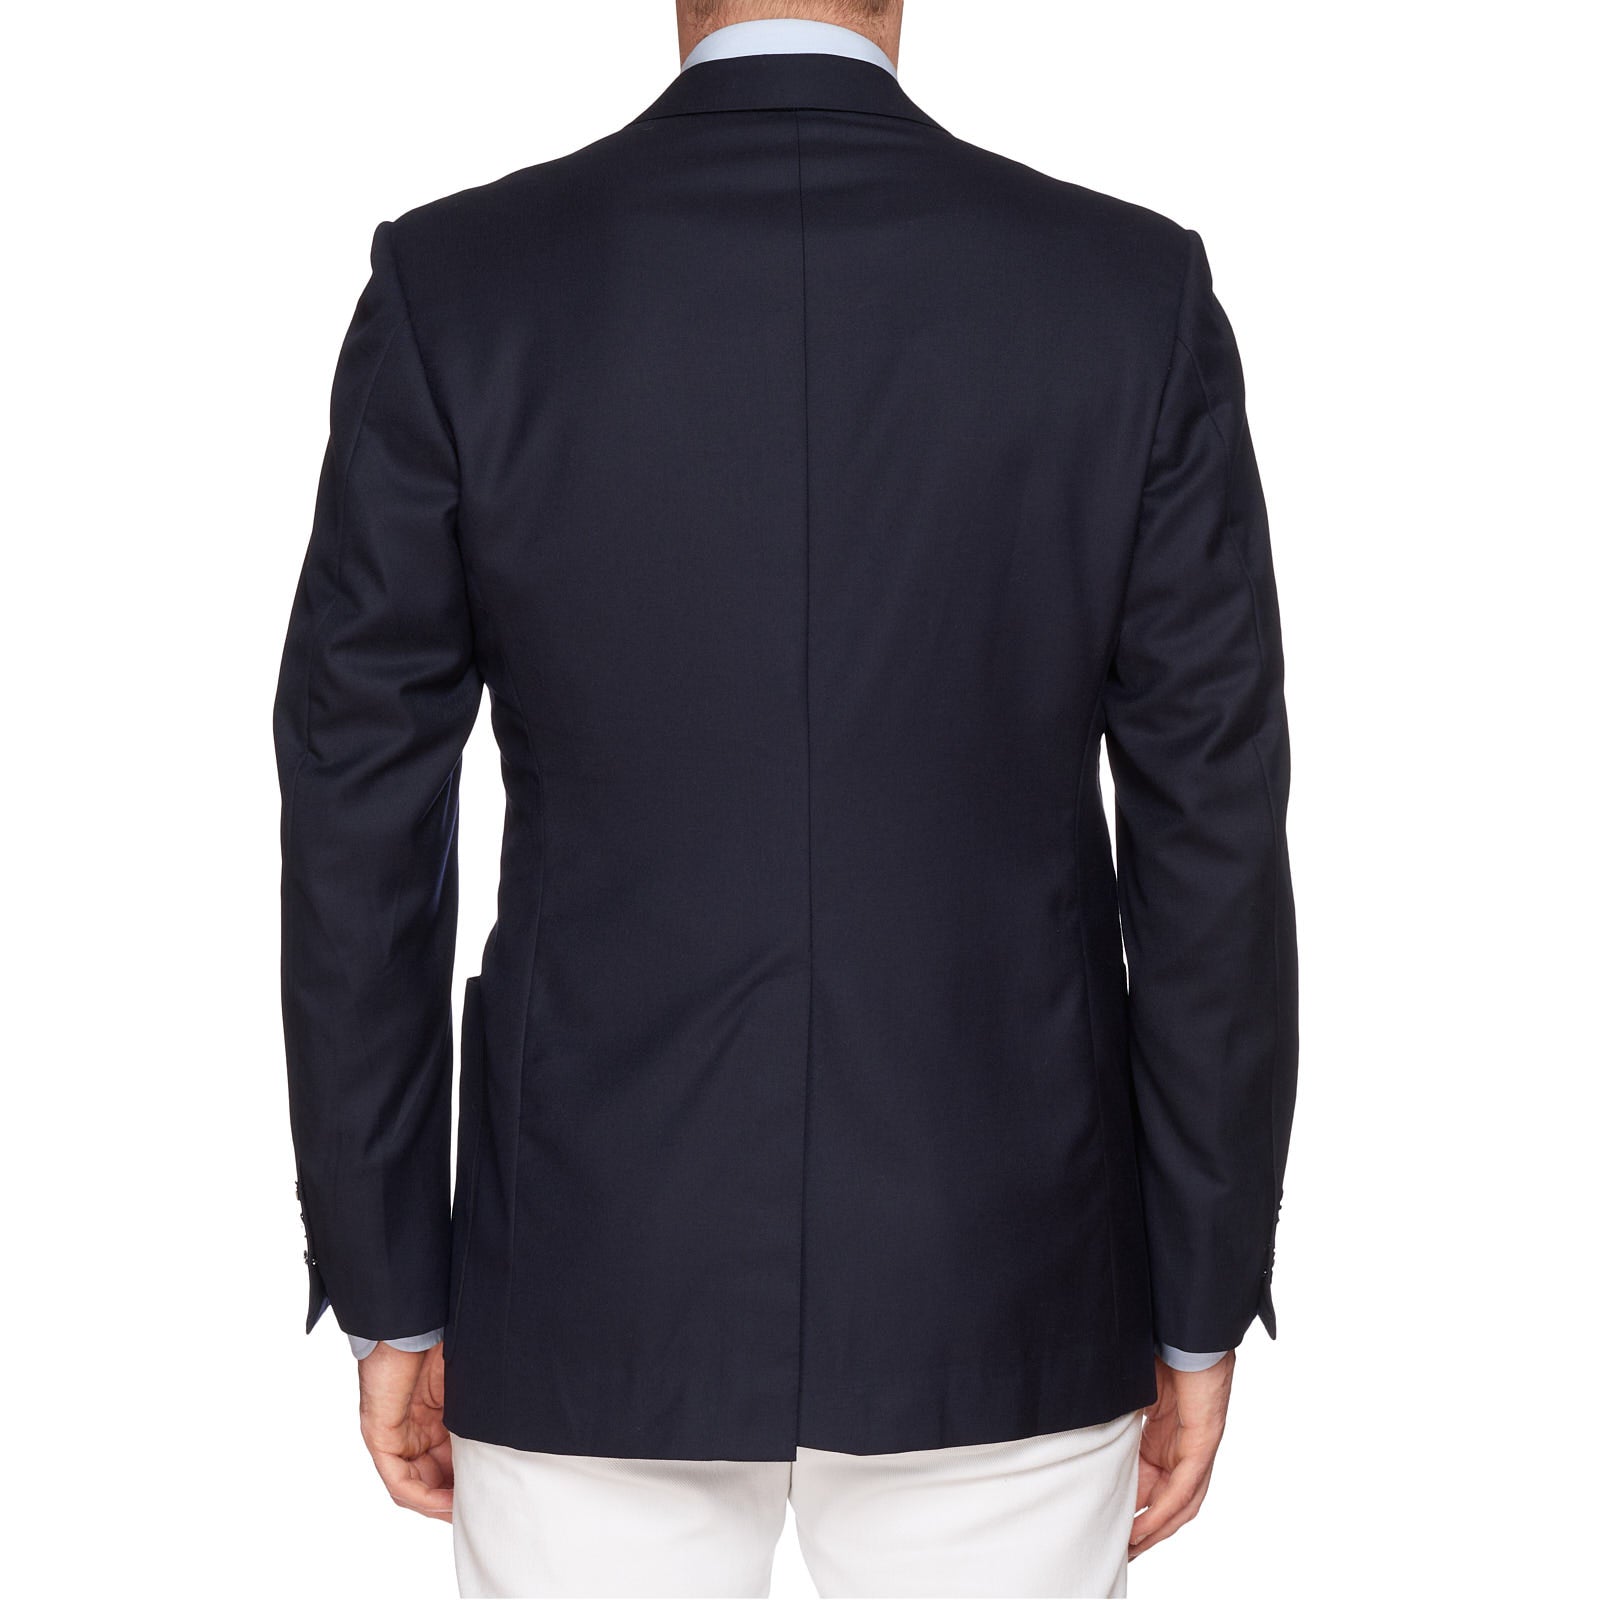 HUNTSMAN Savile Row Bespoke Navy Blue Wool 1 Button Blazer Jacket NEW US 40 HUNTSMAN